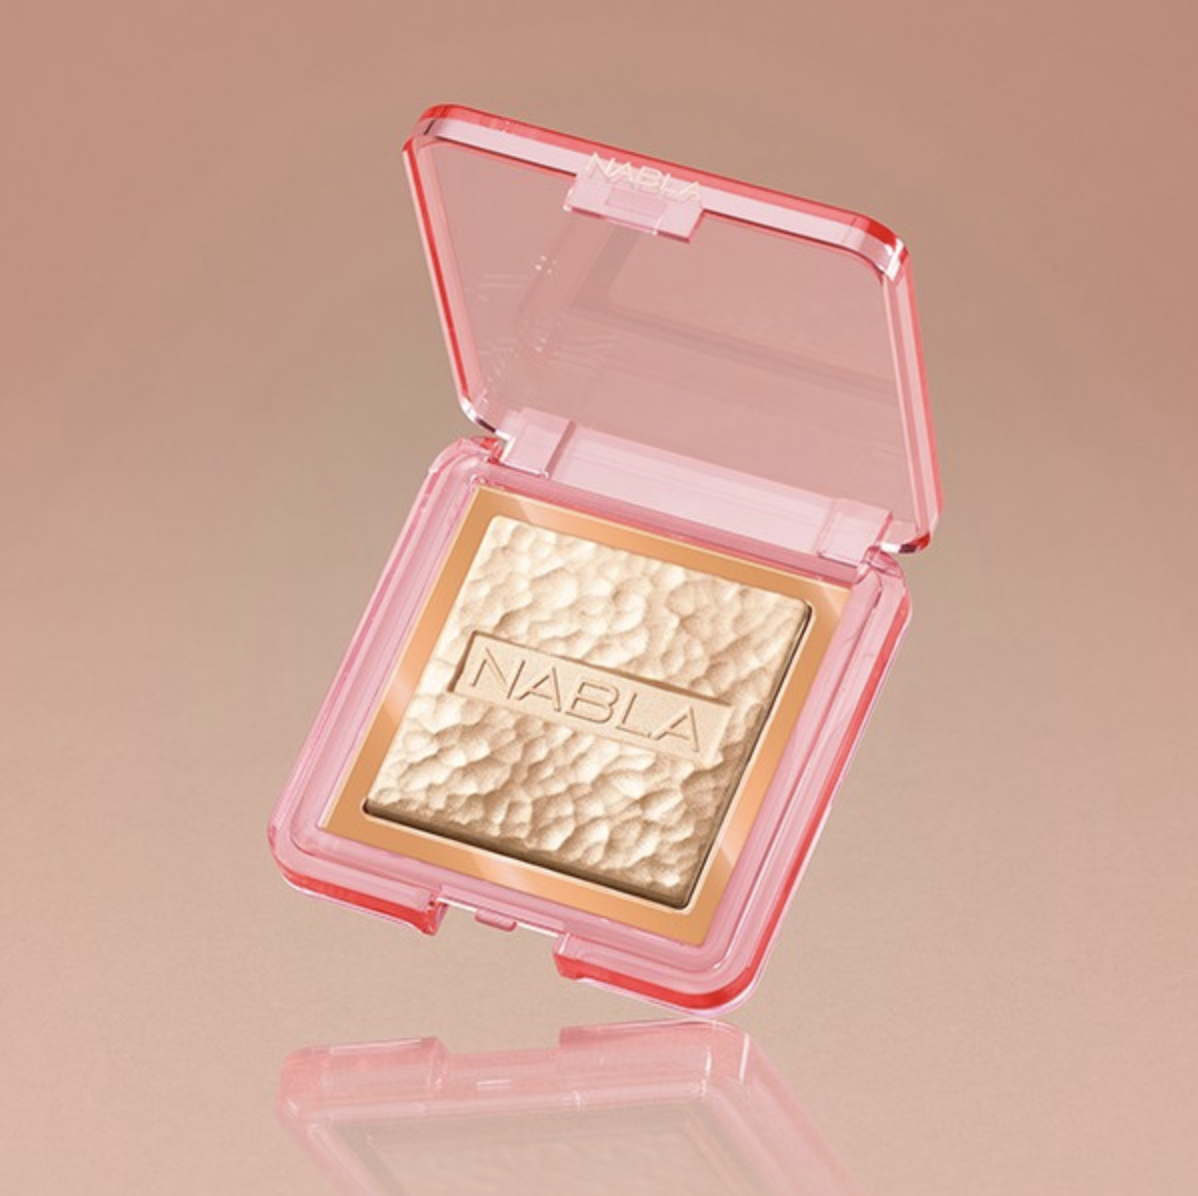 A close-up product shot of Nabla Cosmetics’ Skin Glazing highlighter.